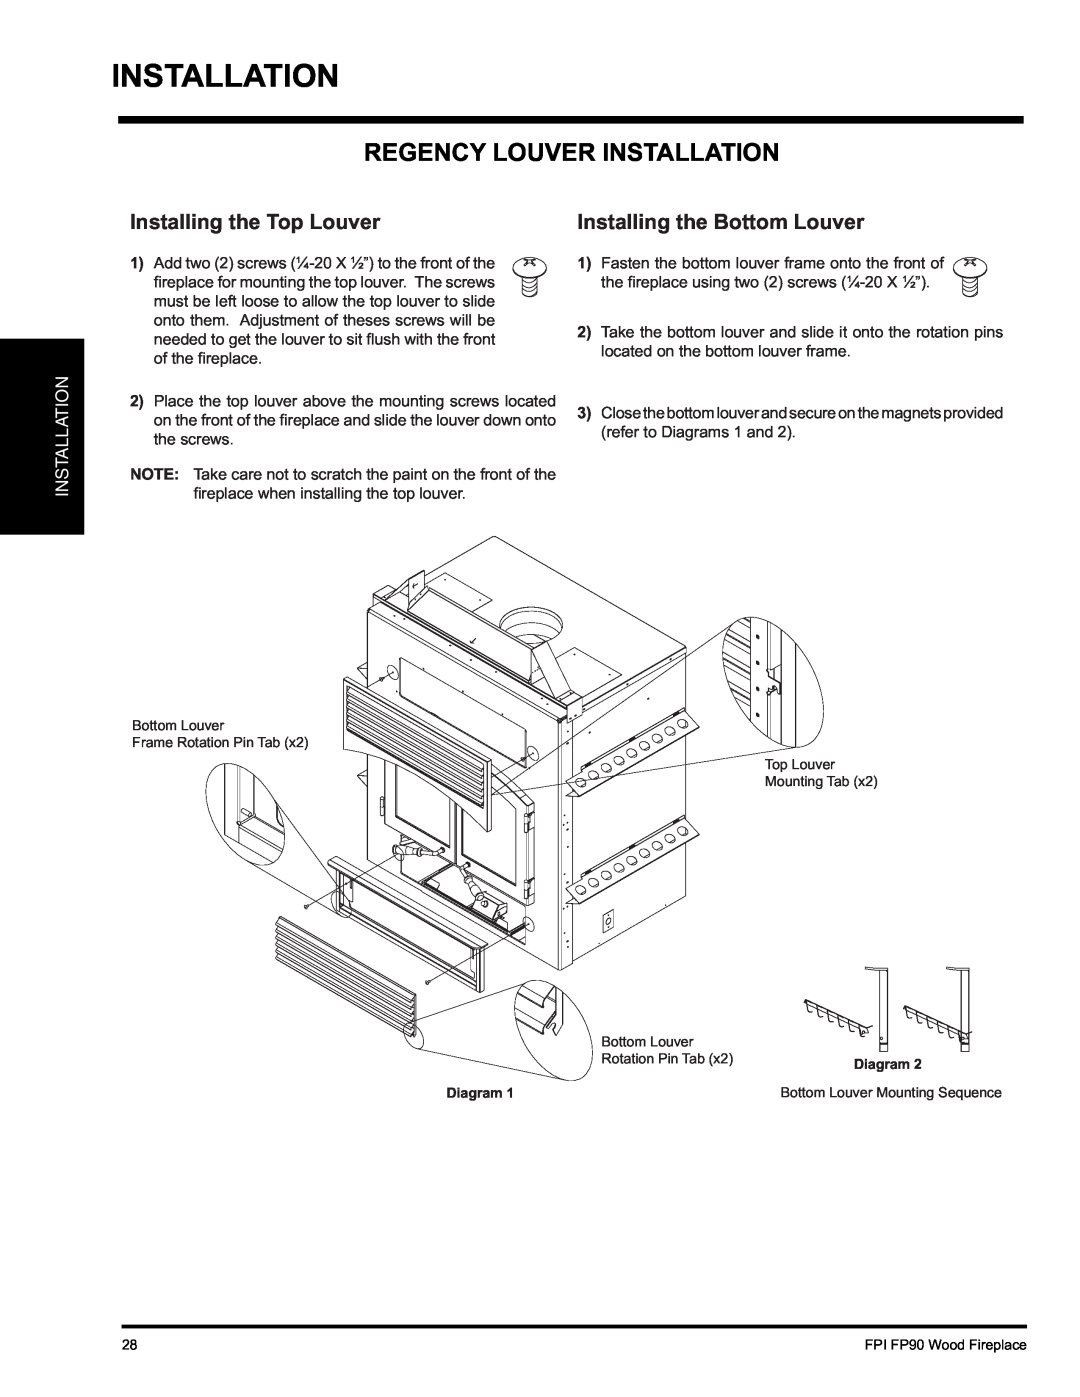 Regency FP90 installation manual Regency Louver Installation, Installing the Top Louver, Installing the Bottom Louver 